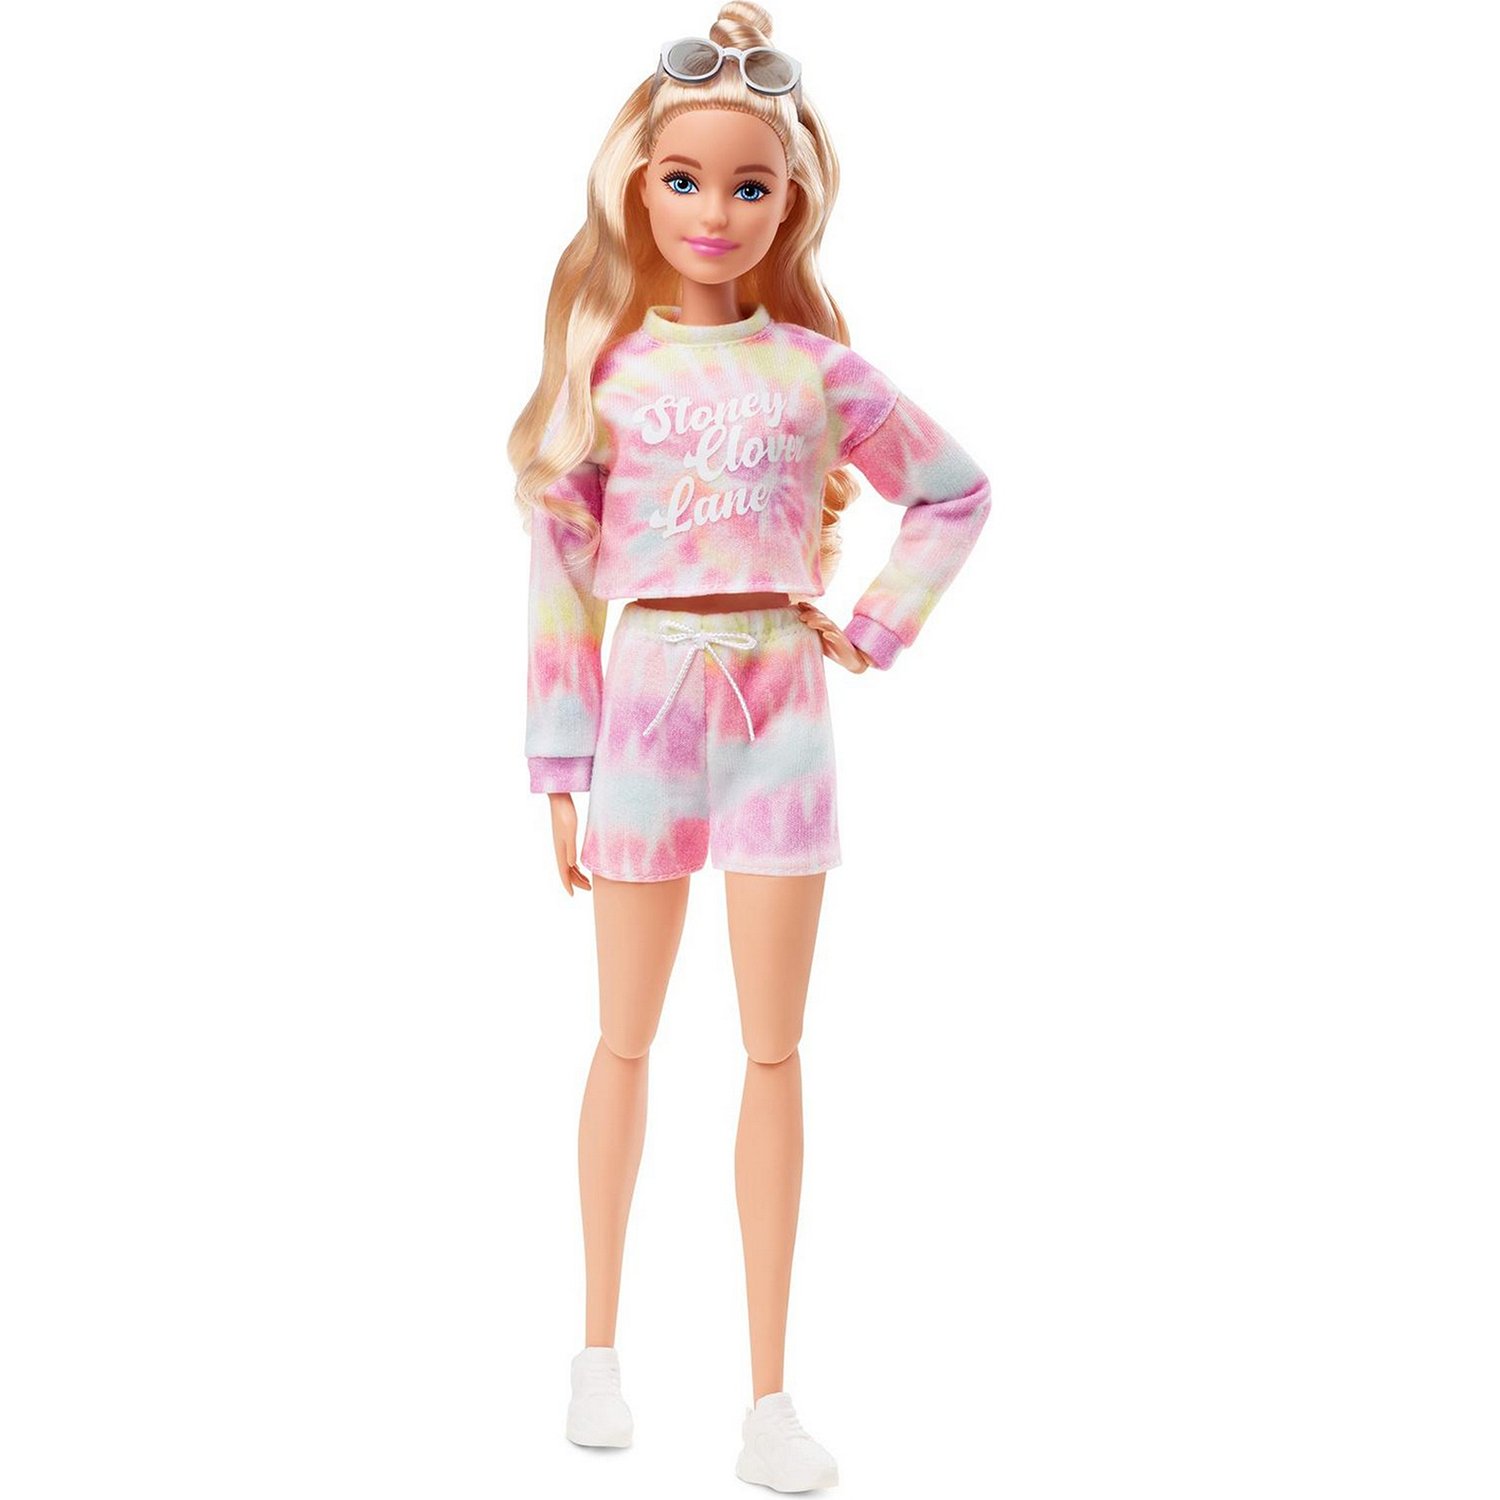 Кукла Barbie GTJ80 Stoney Clover Lane с аксессуарами